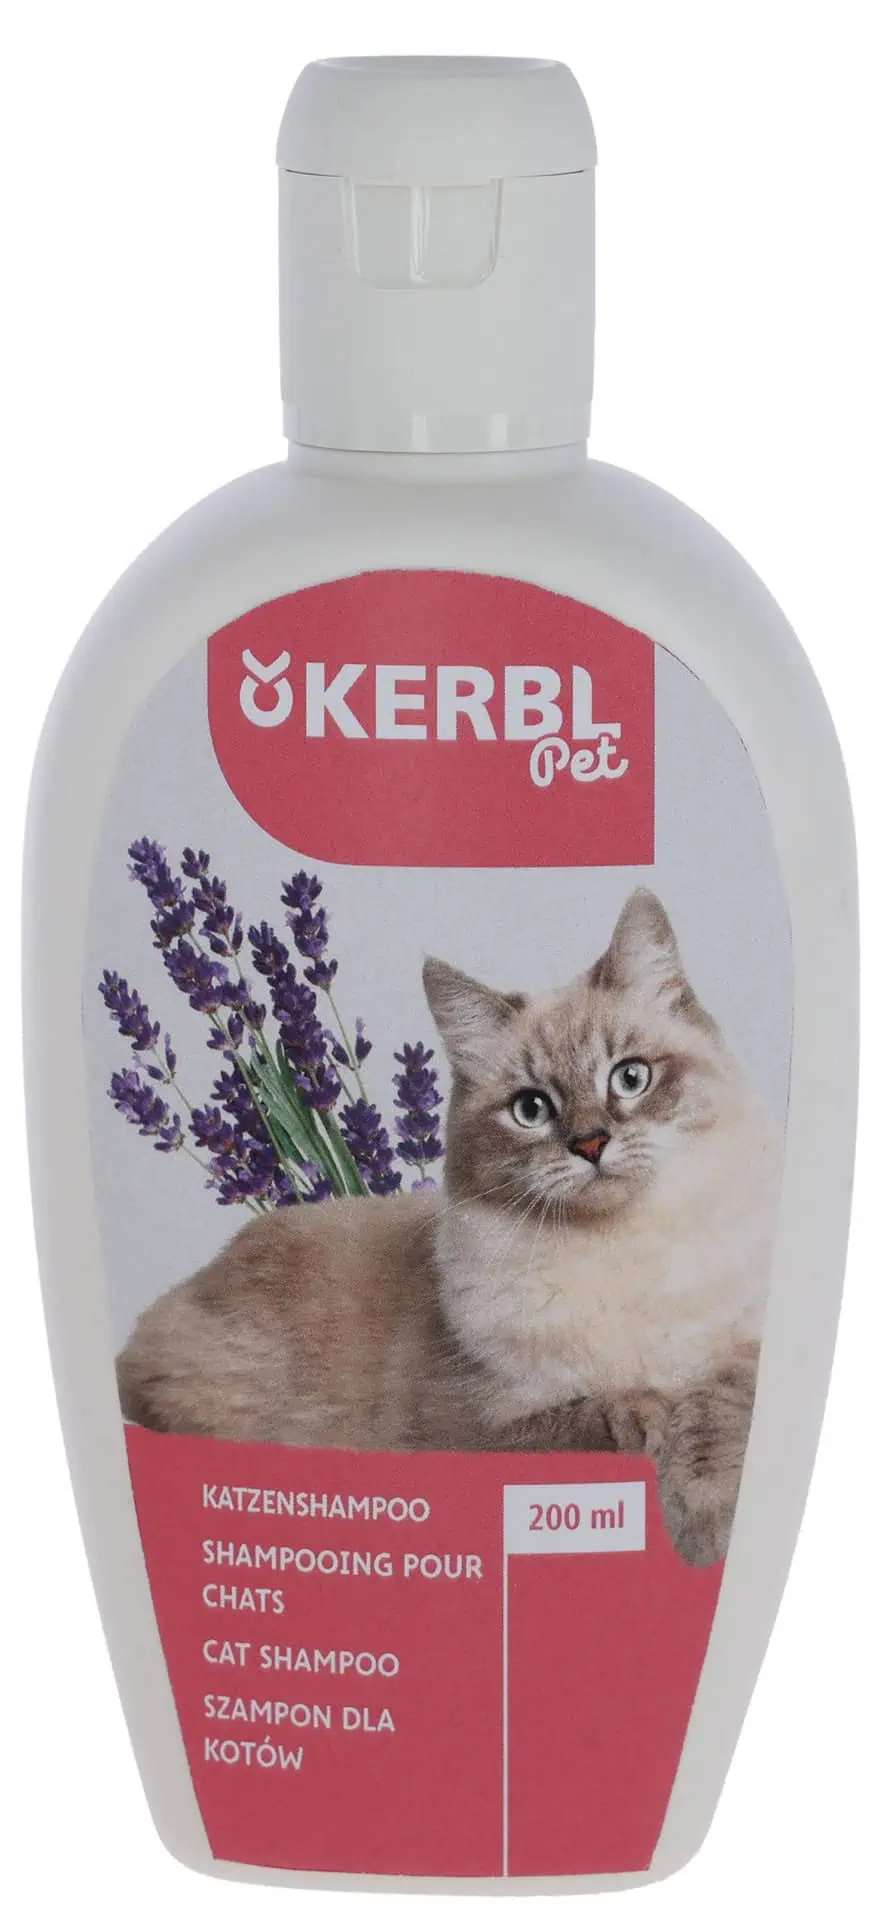 Cat shampoo